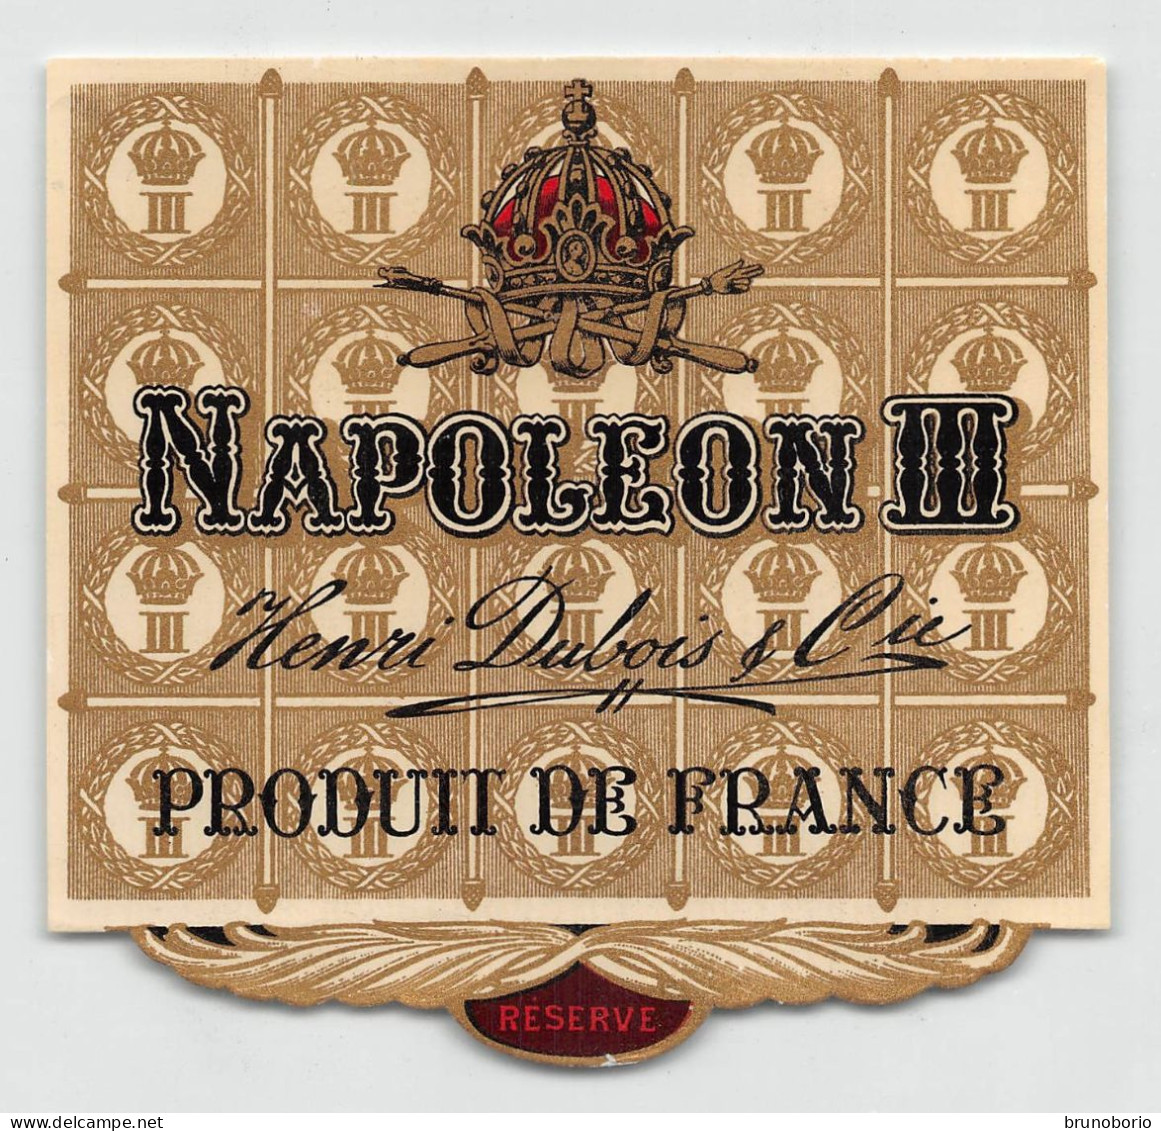 00049 "NAPOLEON III - ENRI DUBOIS & CIE - PRODUIT DE FRANCE" ETICH. ORIG. - Alcoli E Liquori